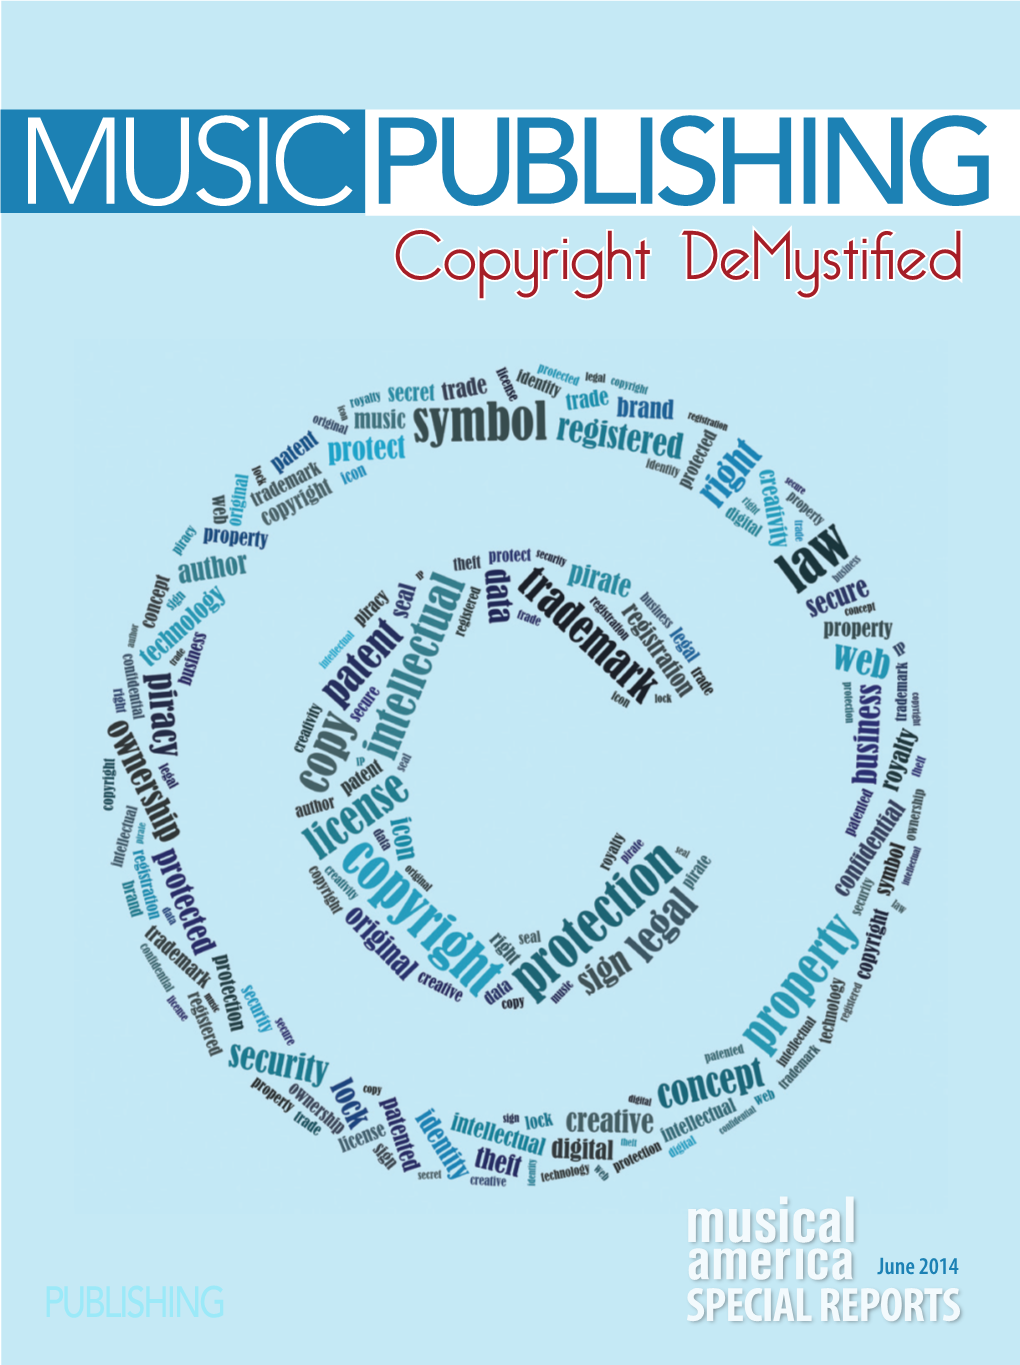 Music Publishing Copyright Demystified